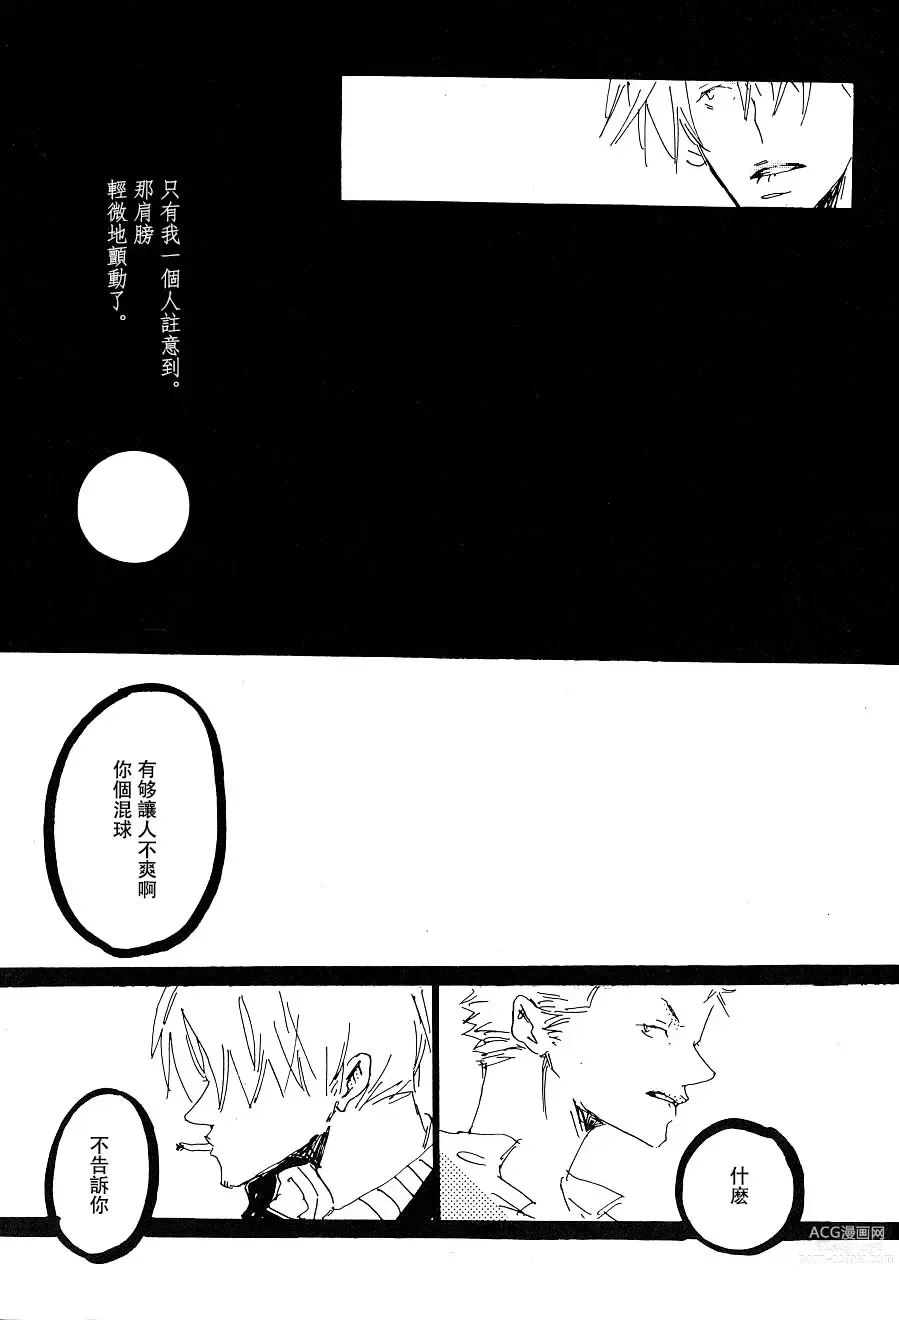 Page 68 of doujinshi 日光菊